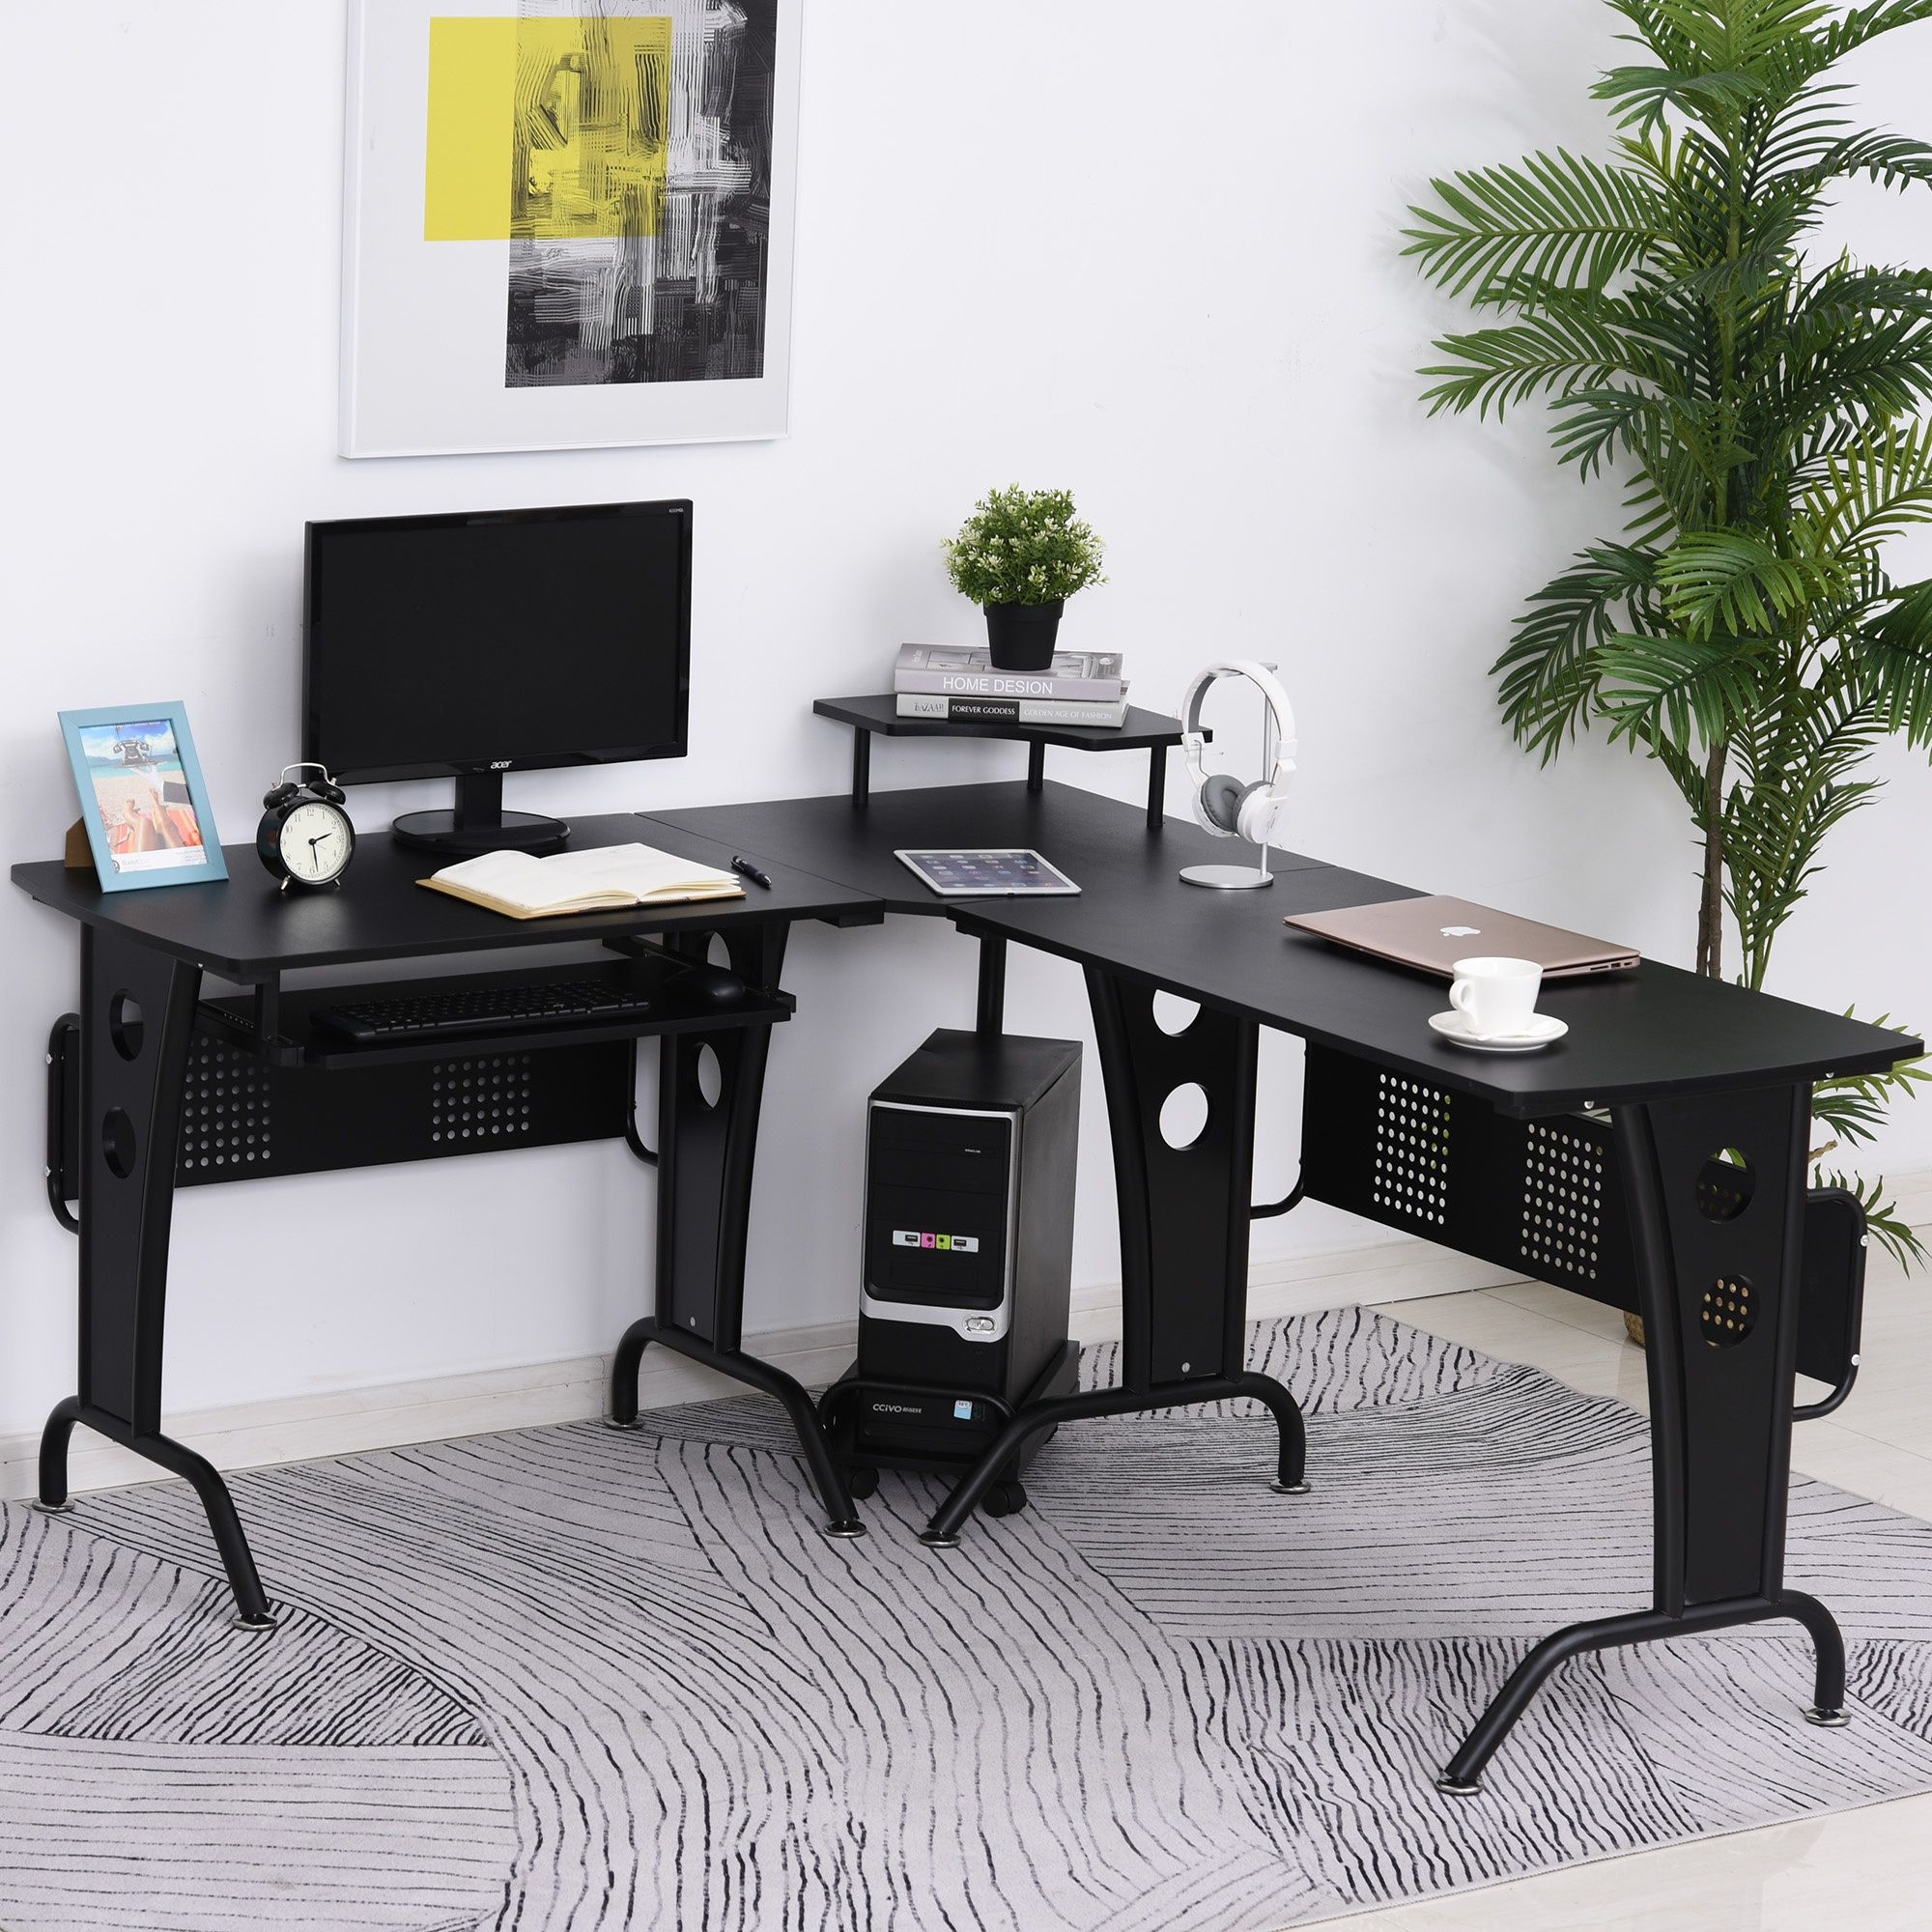 Homcom Steel Mdf Top L Shaped Corner Desk W/ Keyboard Tray Black For Wood And Metal Keyboard Tray Computer Desks (View 15 of 15)